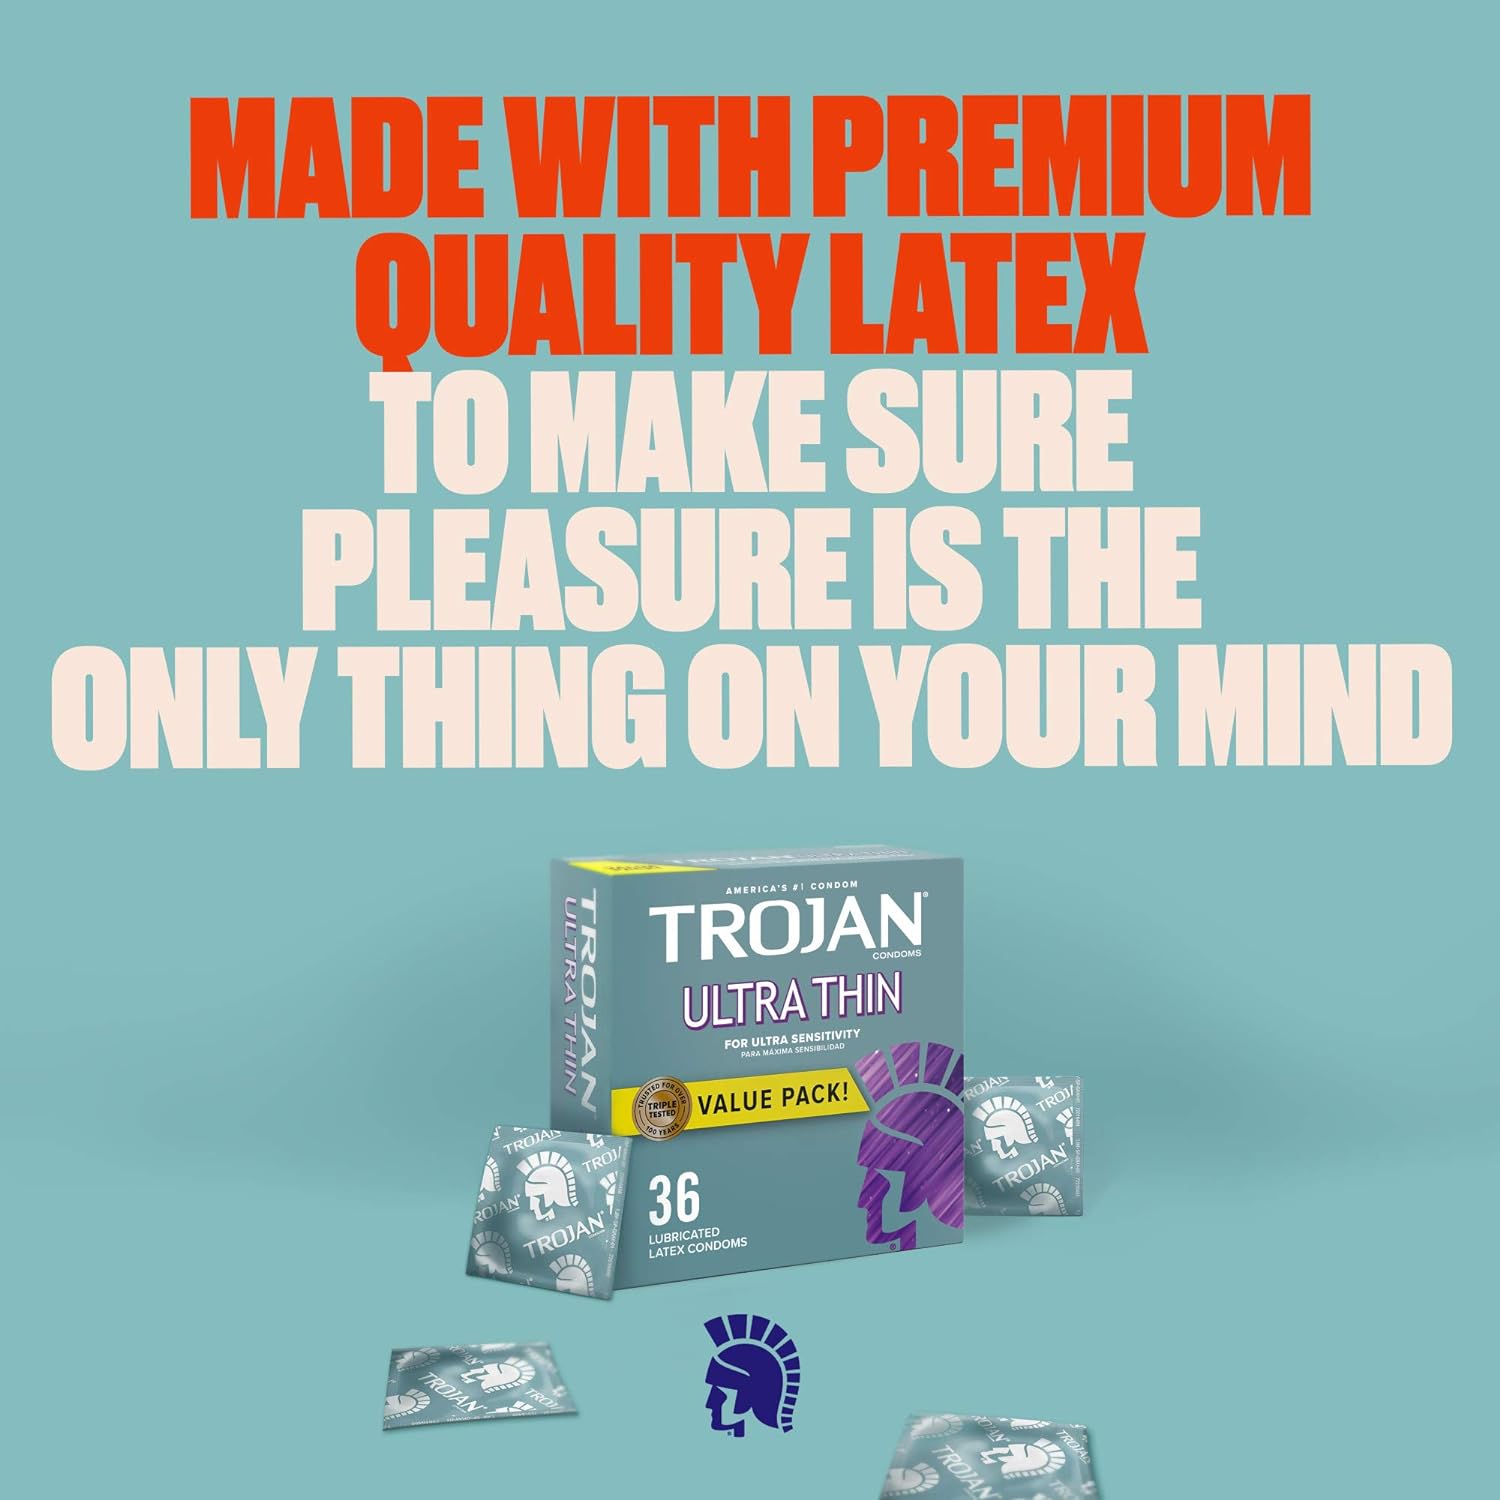 TROJAN Ultra Thin Condoms Review